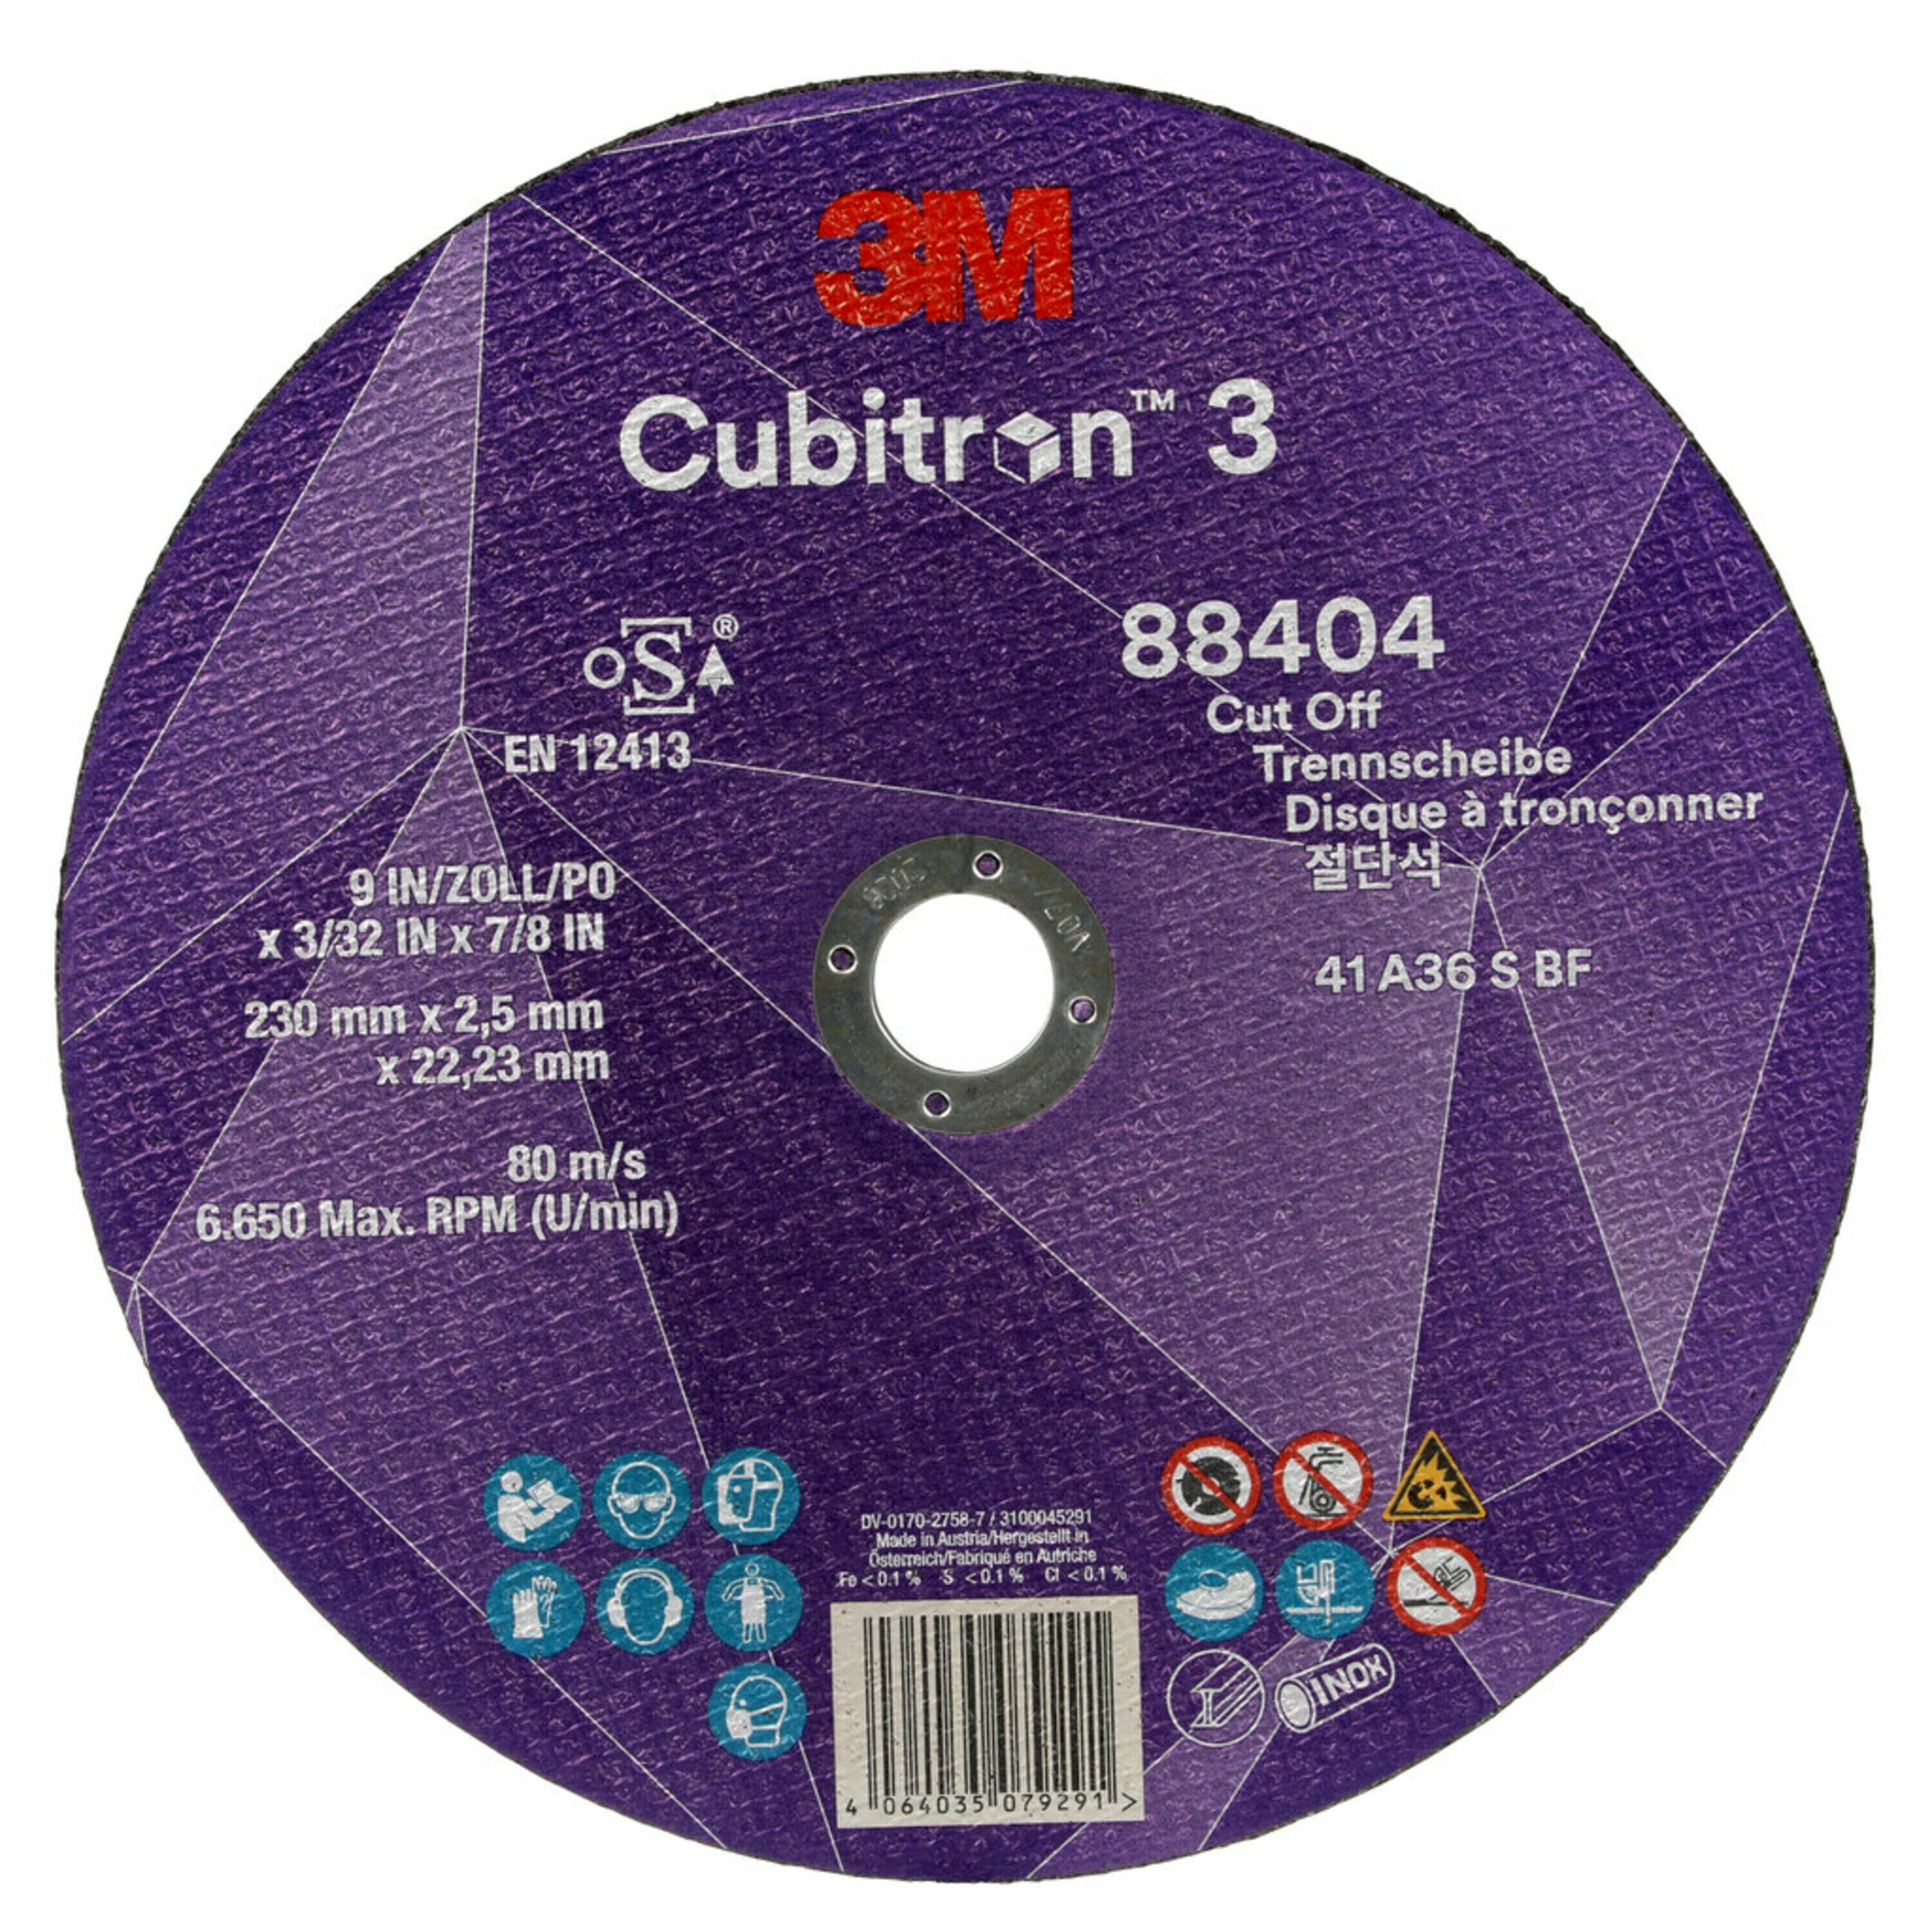 3M Cubitron 3 Trennscheibe, 230 mm, 2,5 mm, 22,23 mm, 36+, Typ 41 #88404